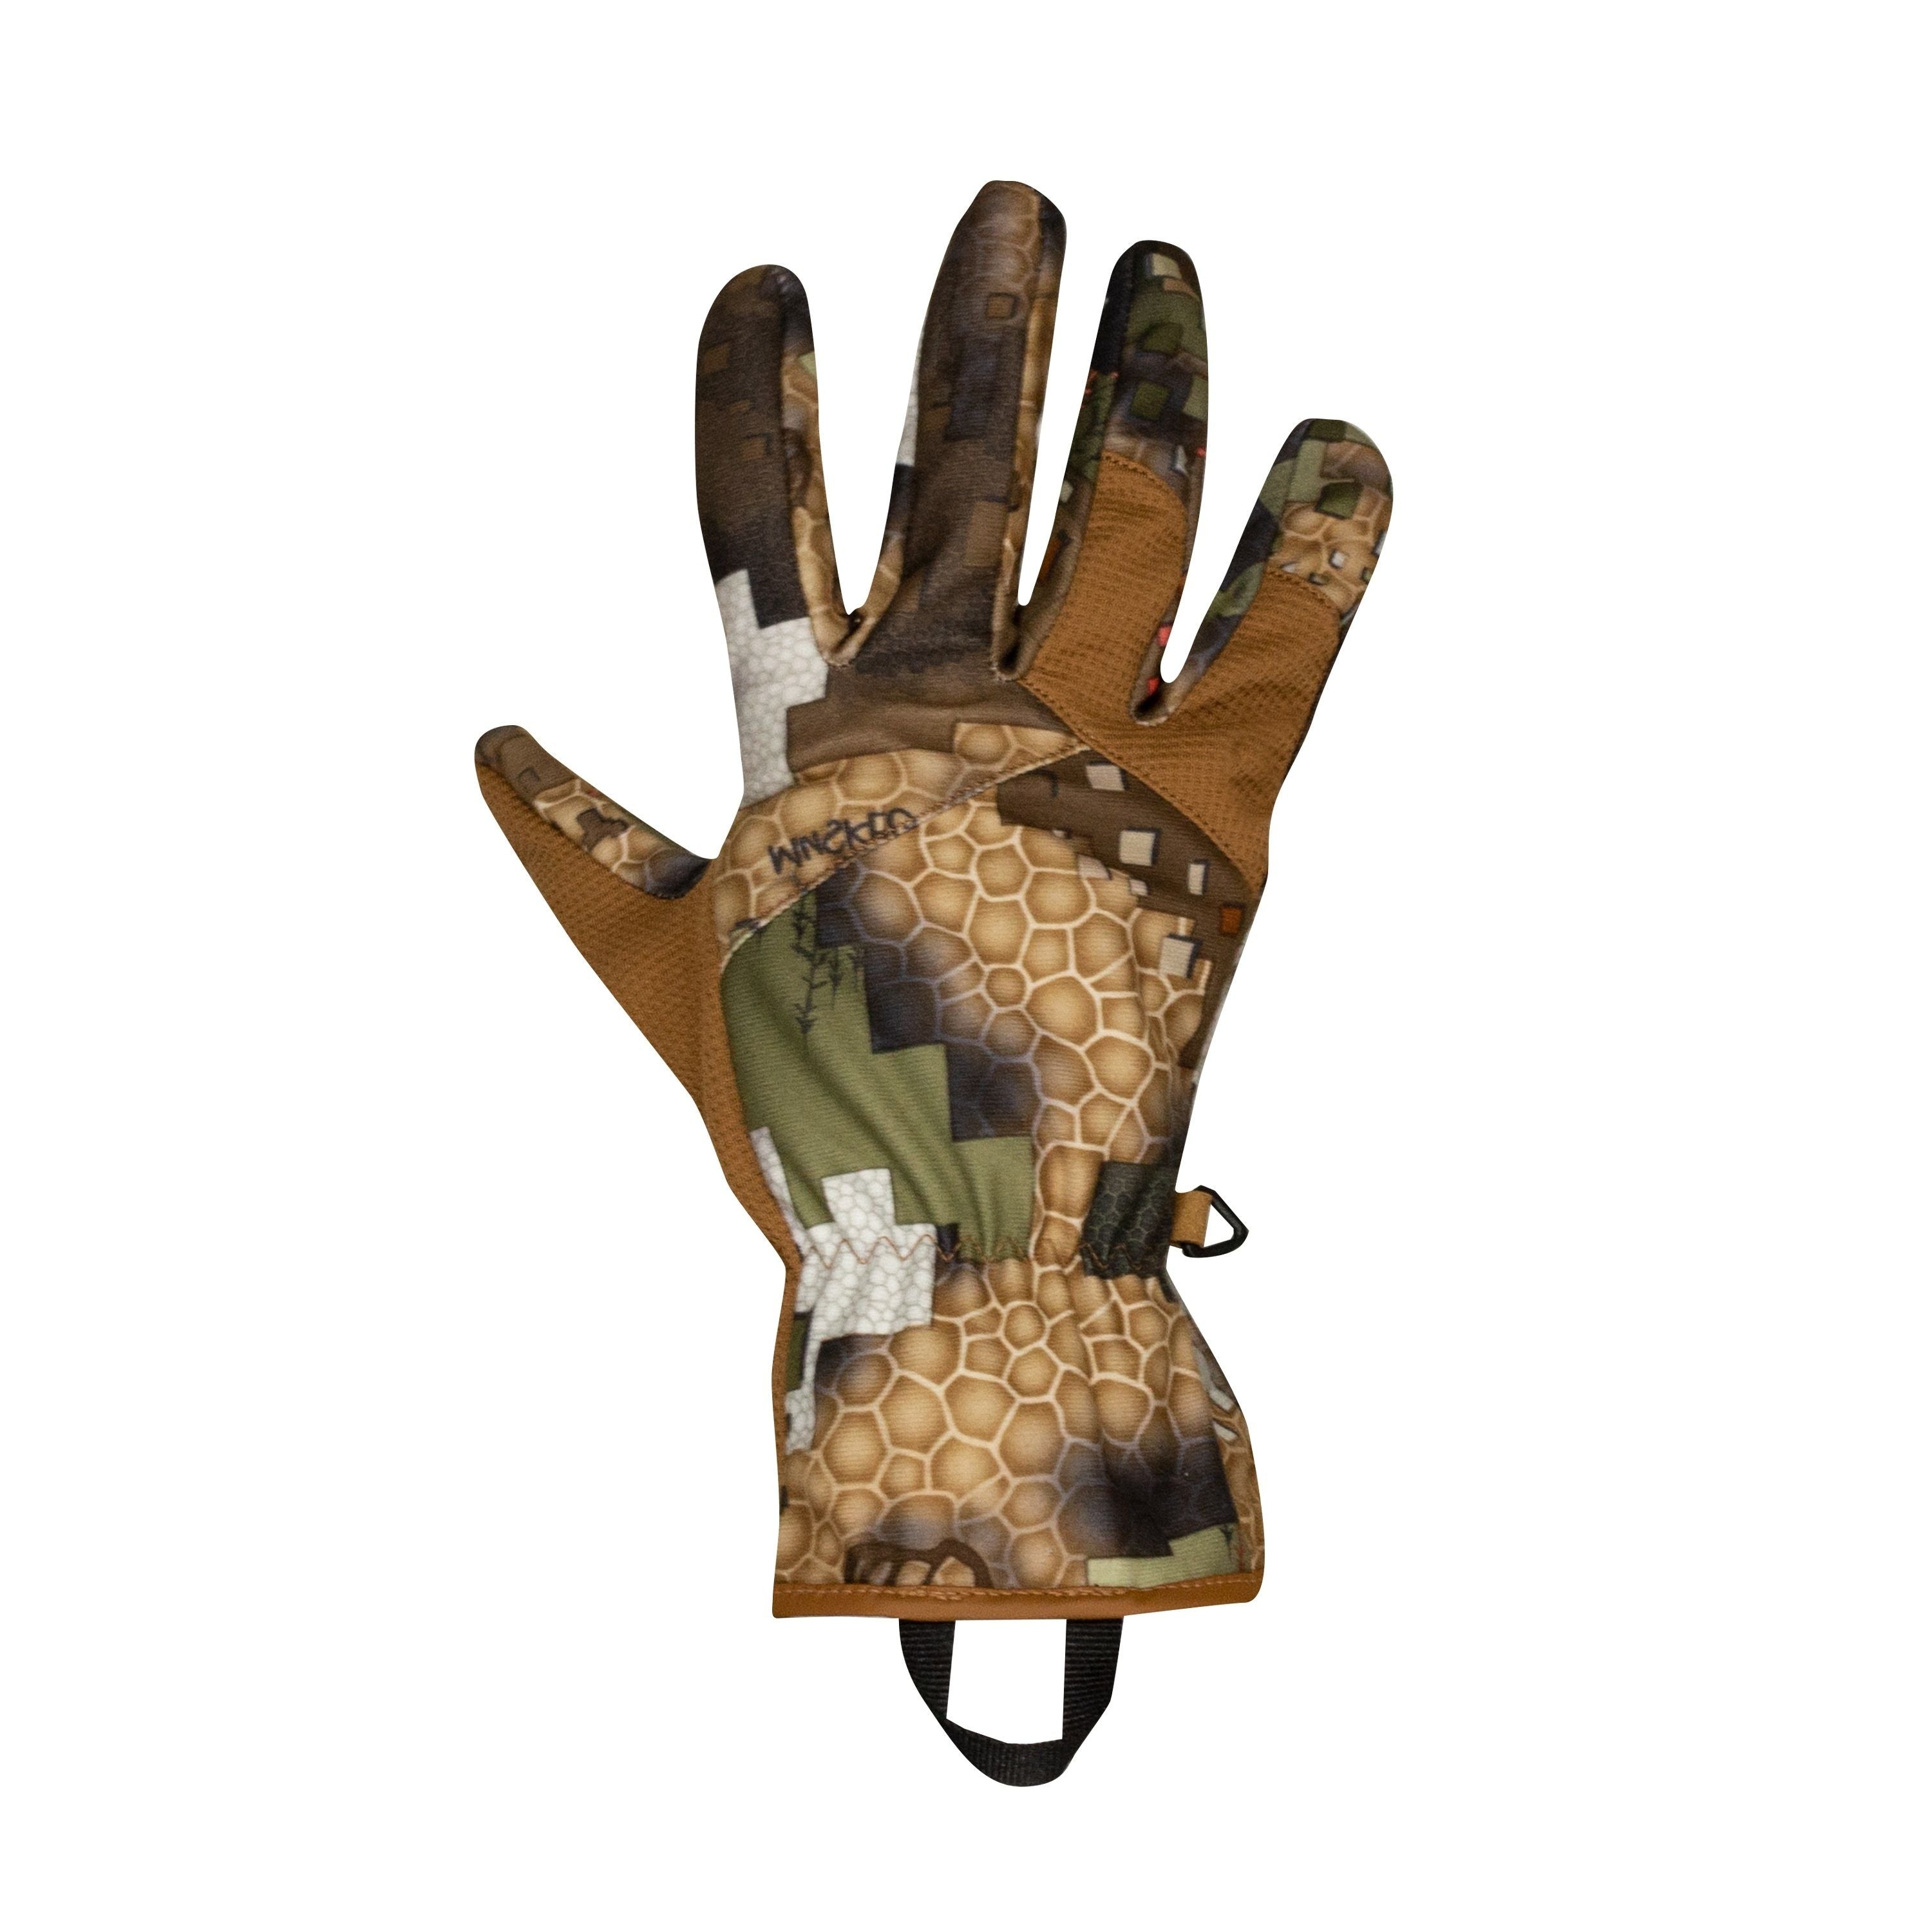 Gants de chasse non doublé "Muskeg" - Homme||Unlined hunting glove "Muskeg" - Men's